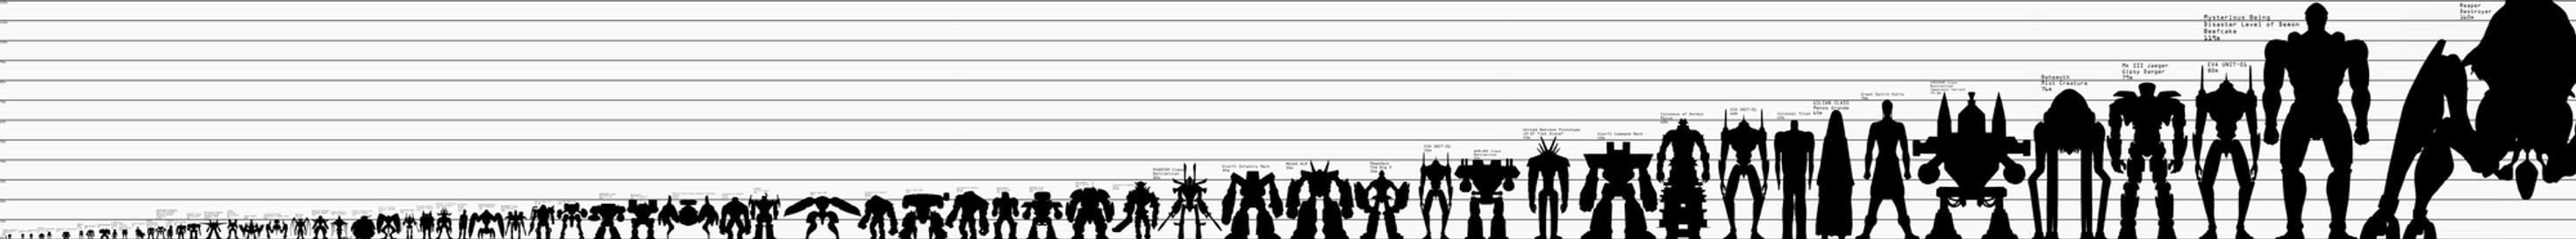 Attack On Titan Titan Size Chart